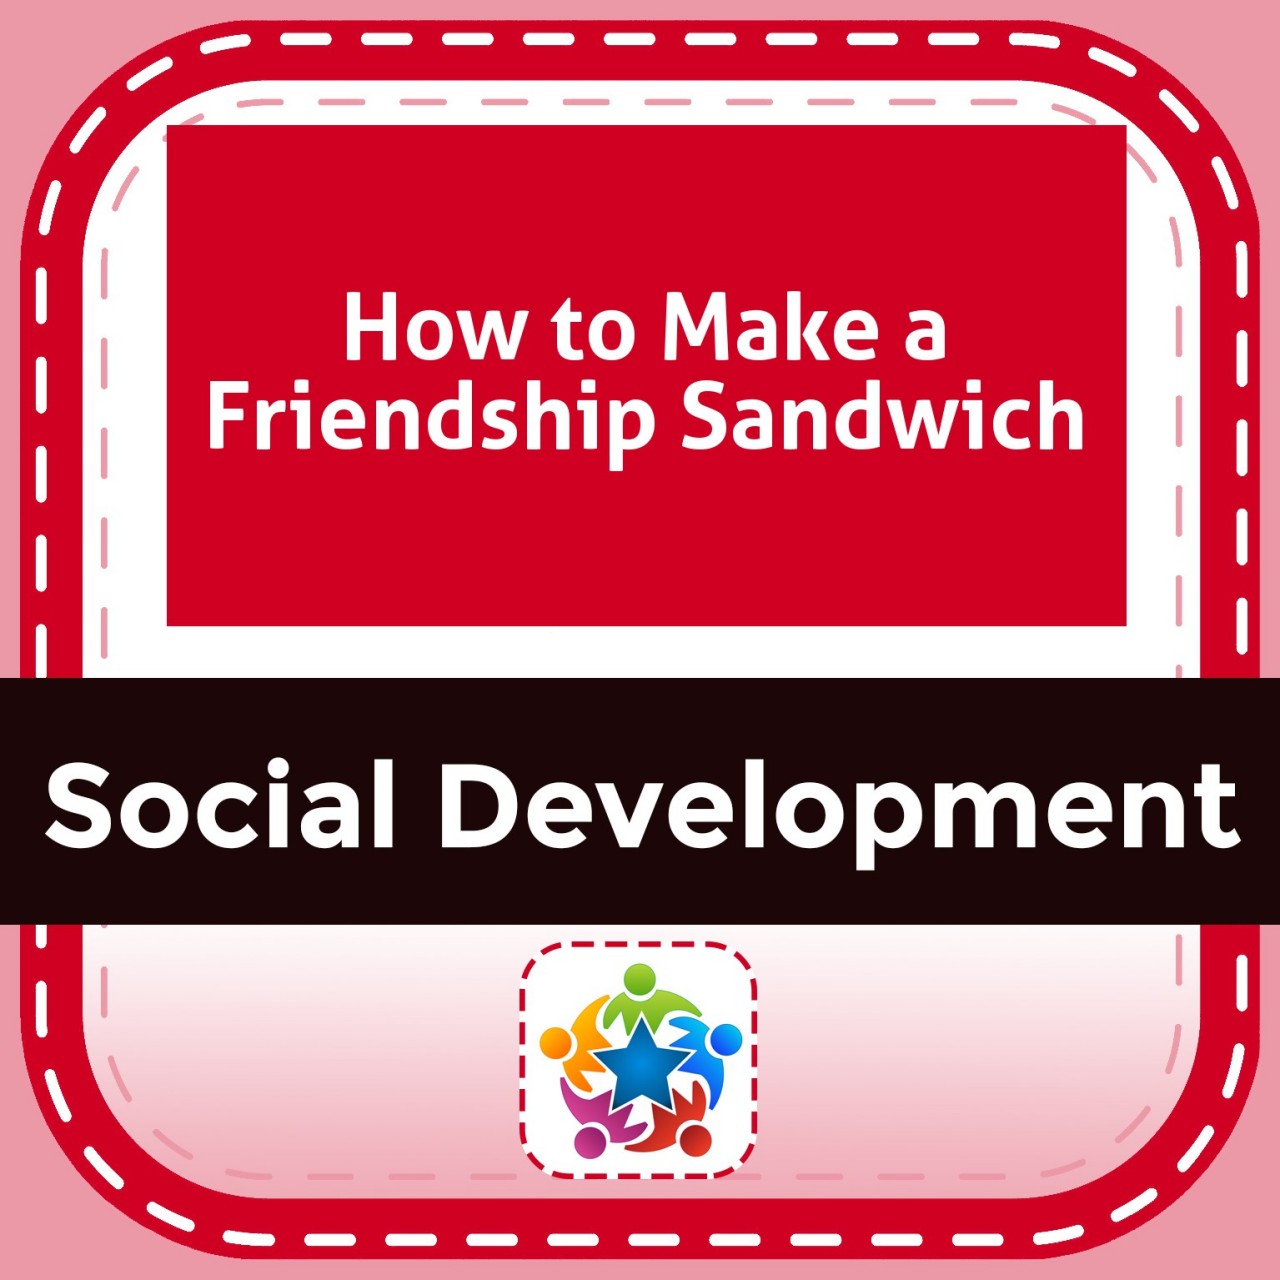 How to Make a Friendship Sandwich